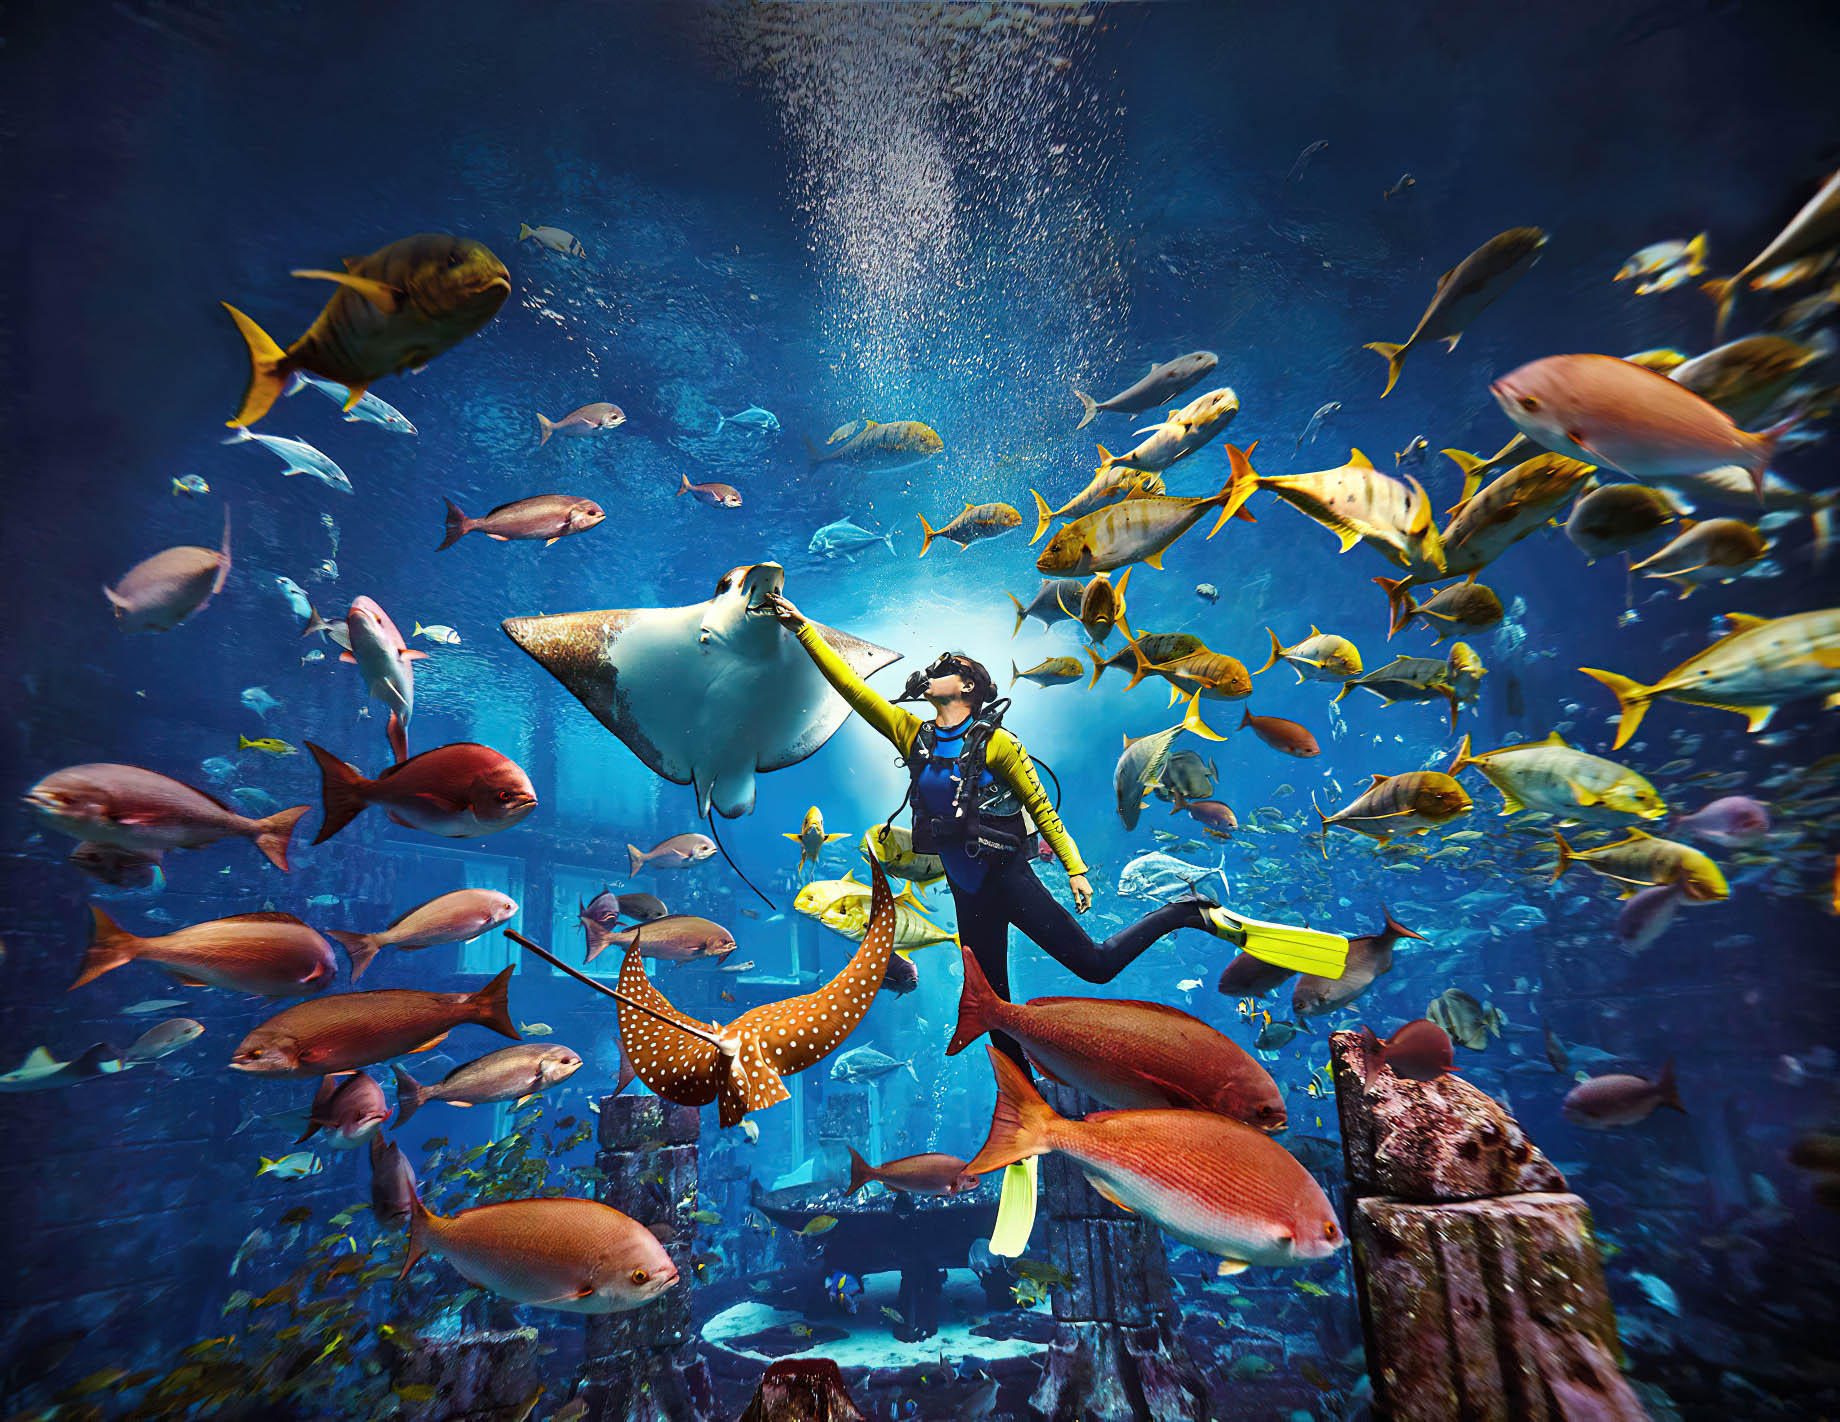 Atlantis The Palm Resort – Crescent Rd, Dubai, UAE – Predator Dive Adventure